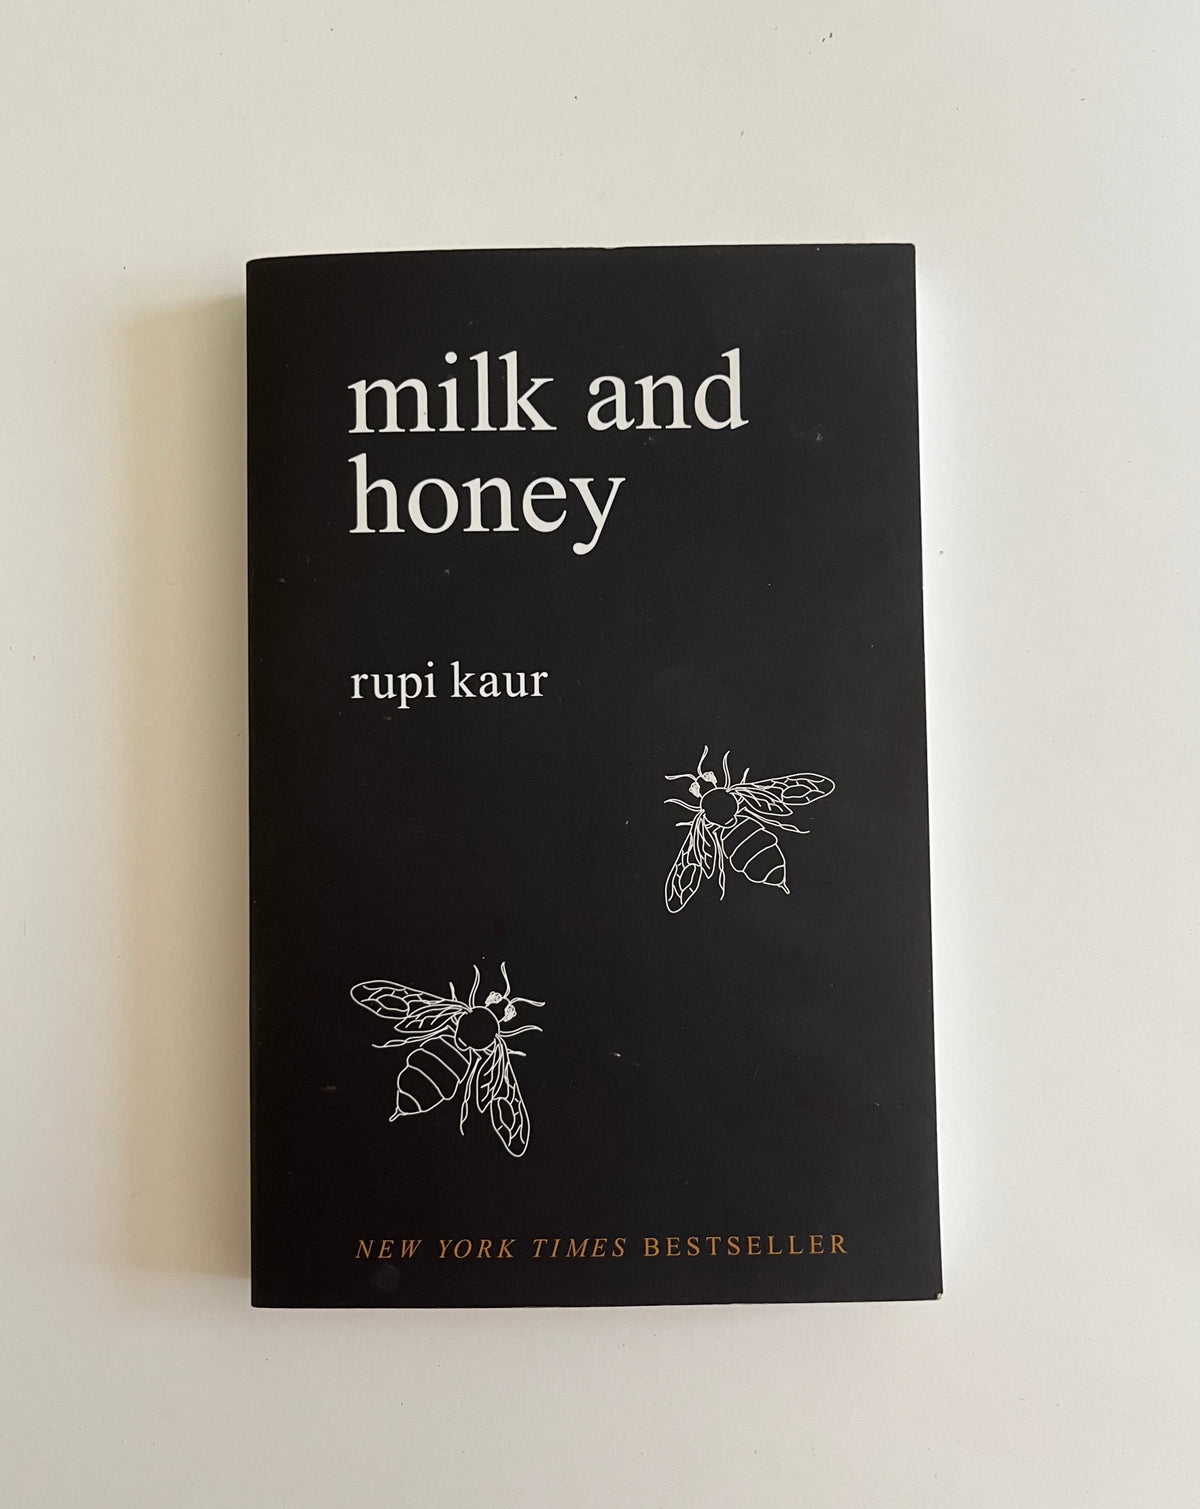 Milk and Honey by Rupi Kaur